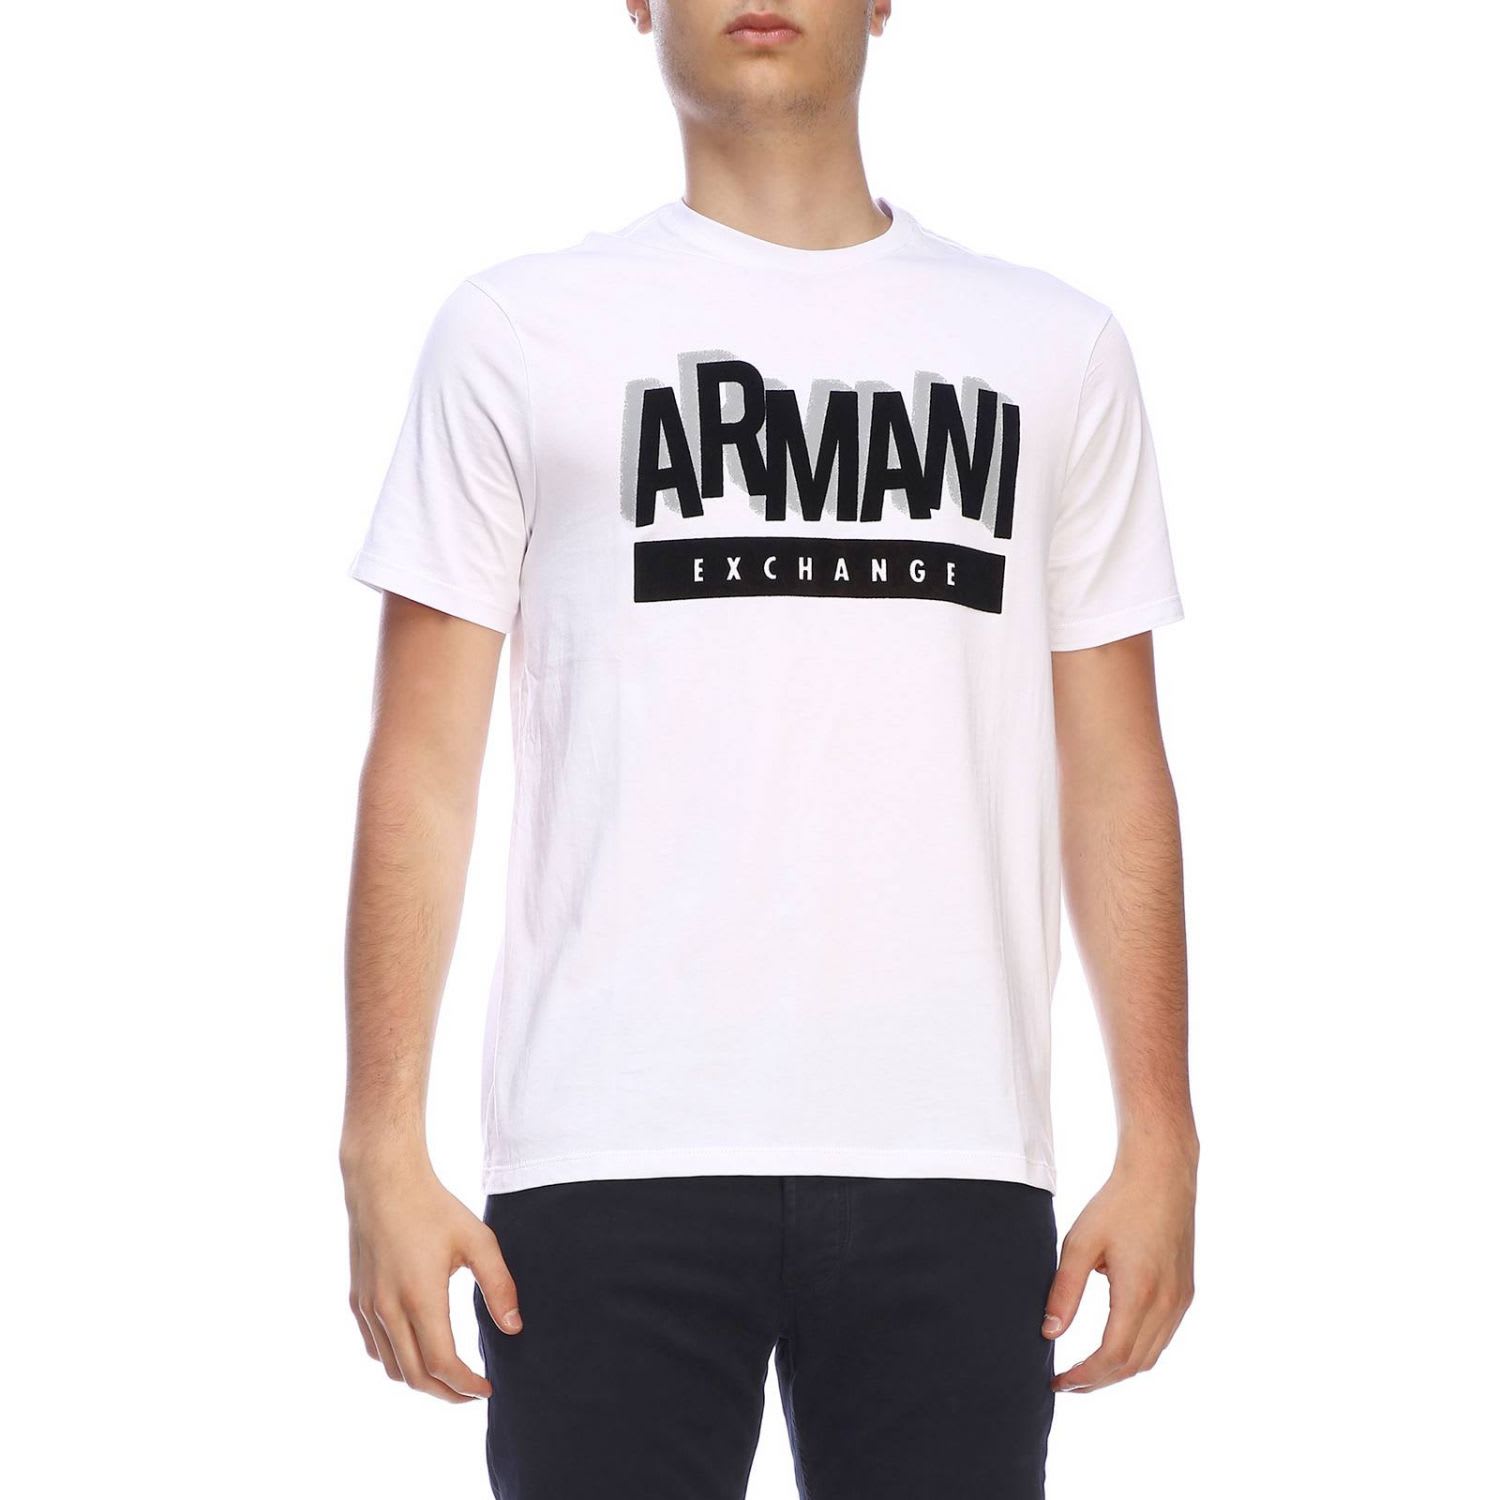 Armani Exchange Shirt Size Chart